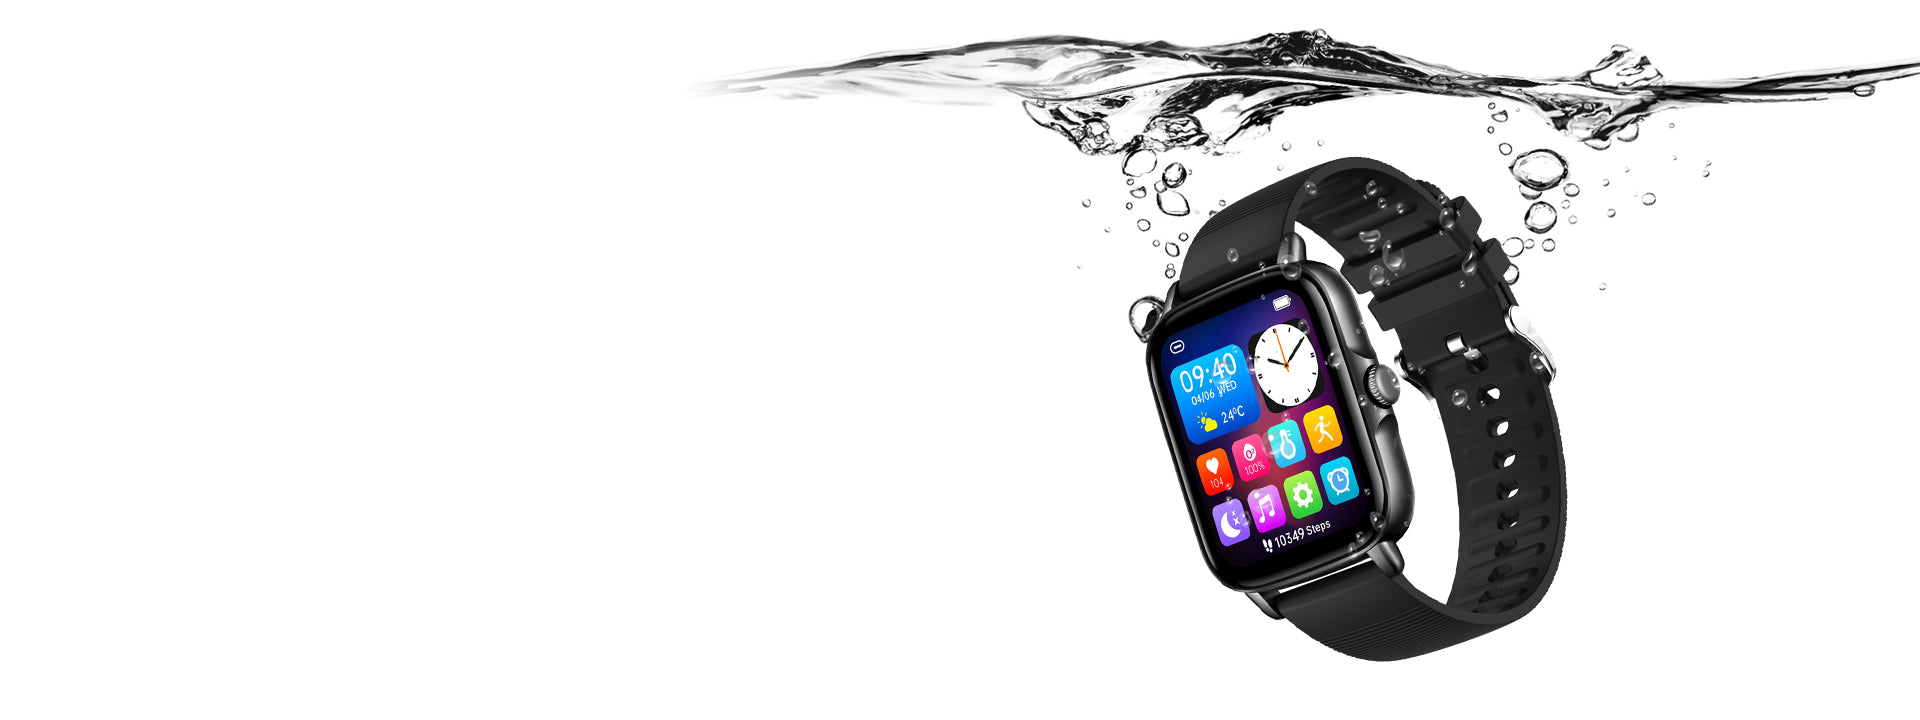 COLMi P30 Smart watch IP67 waterproof